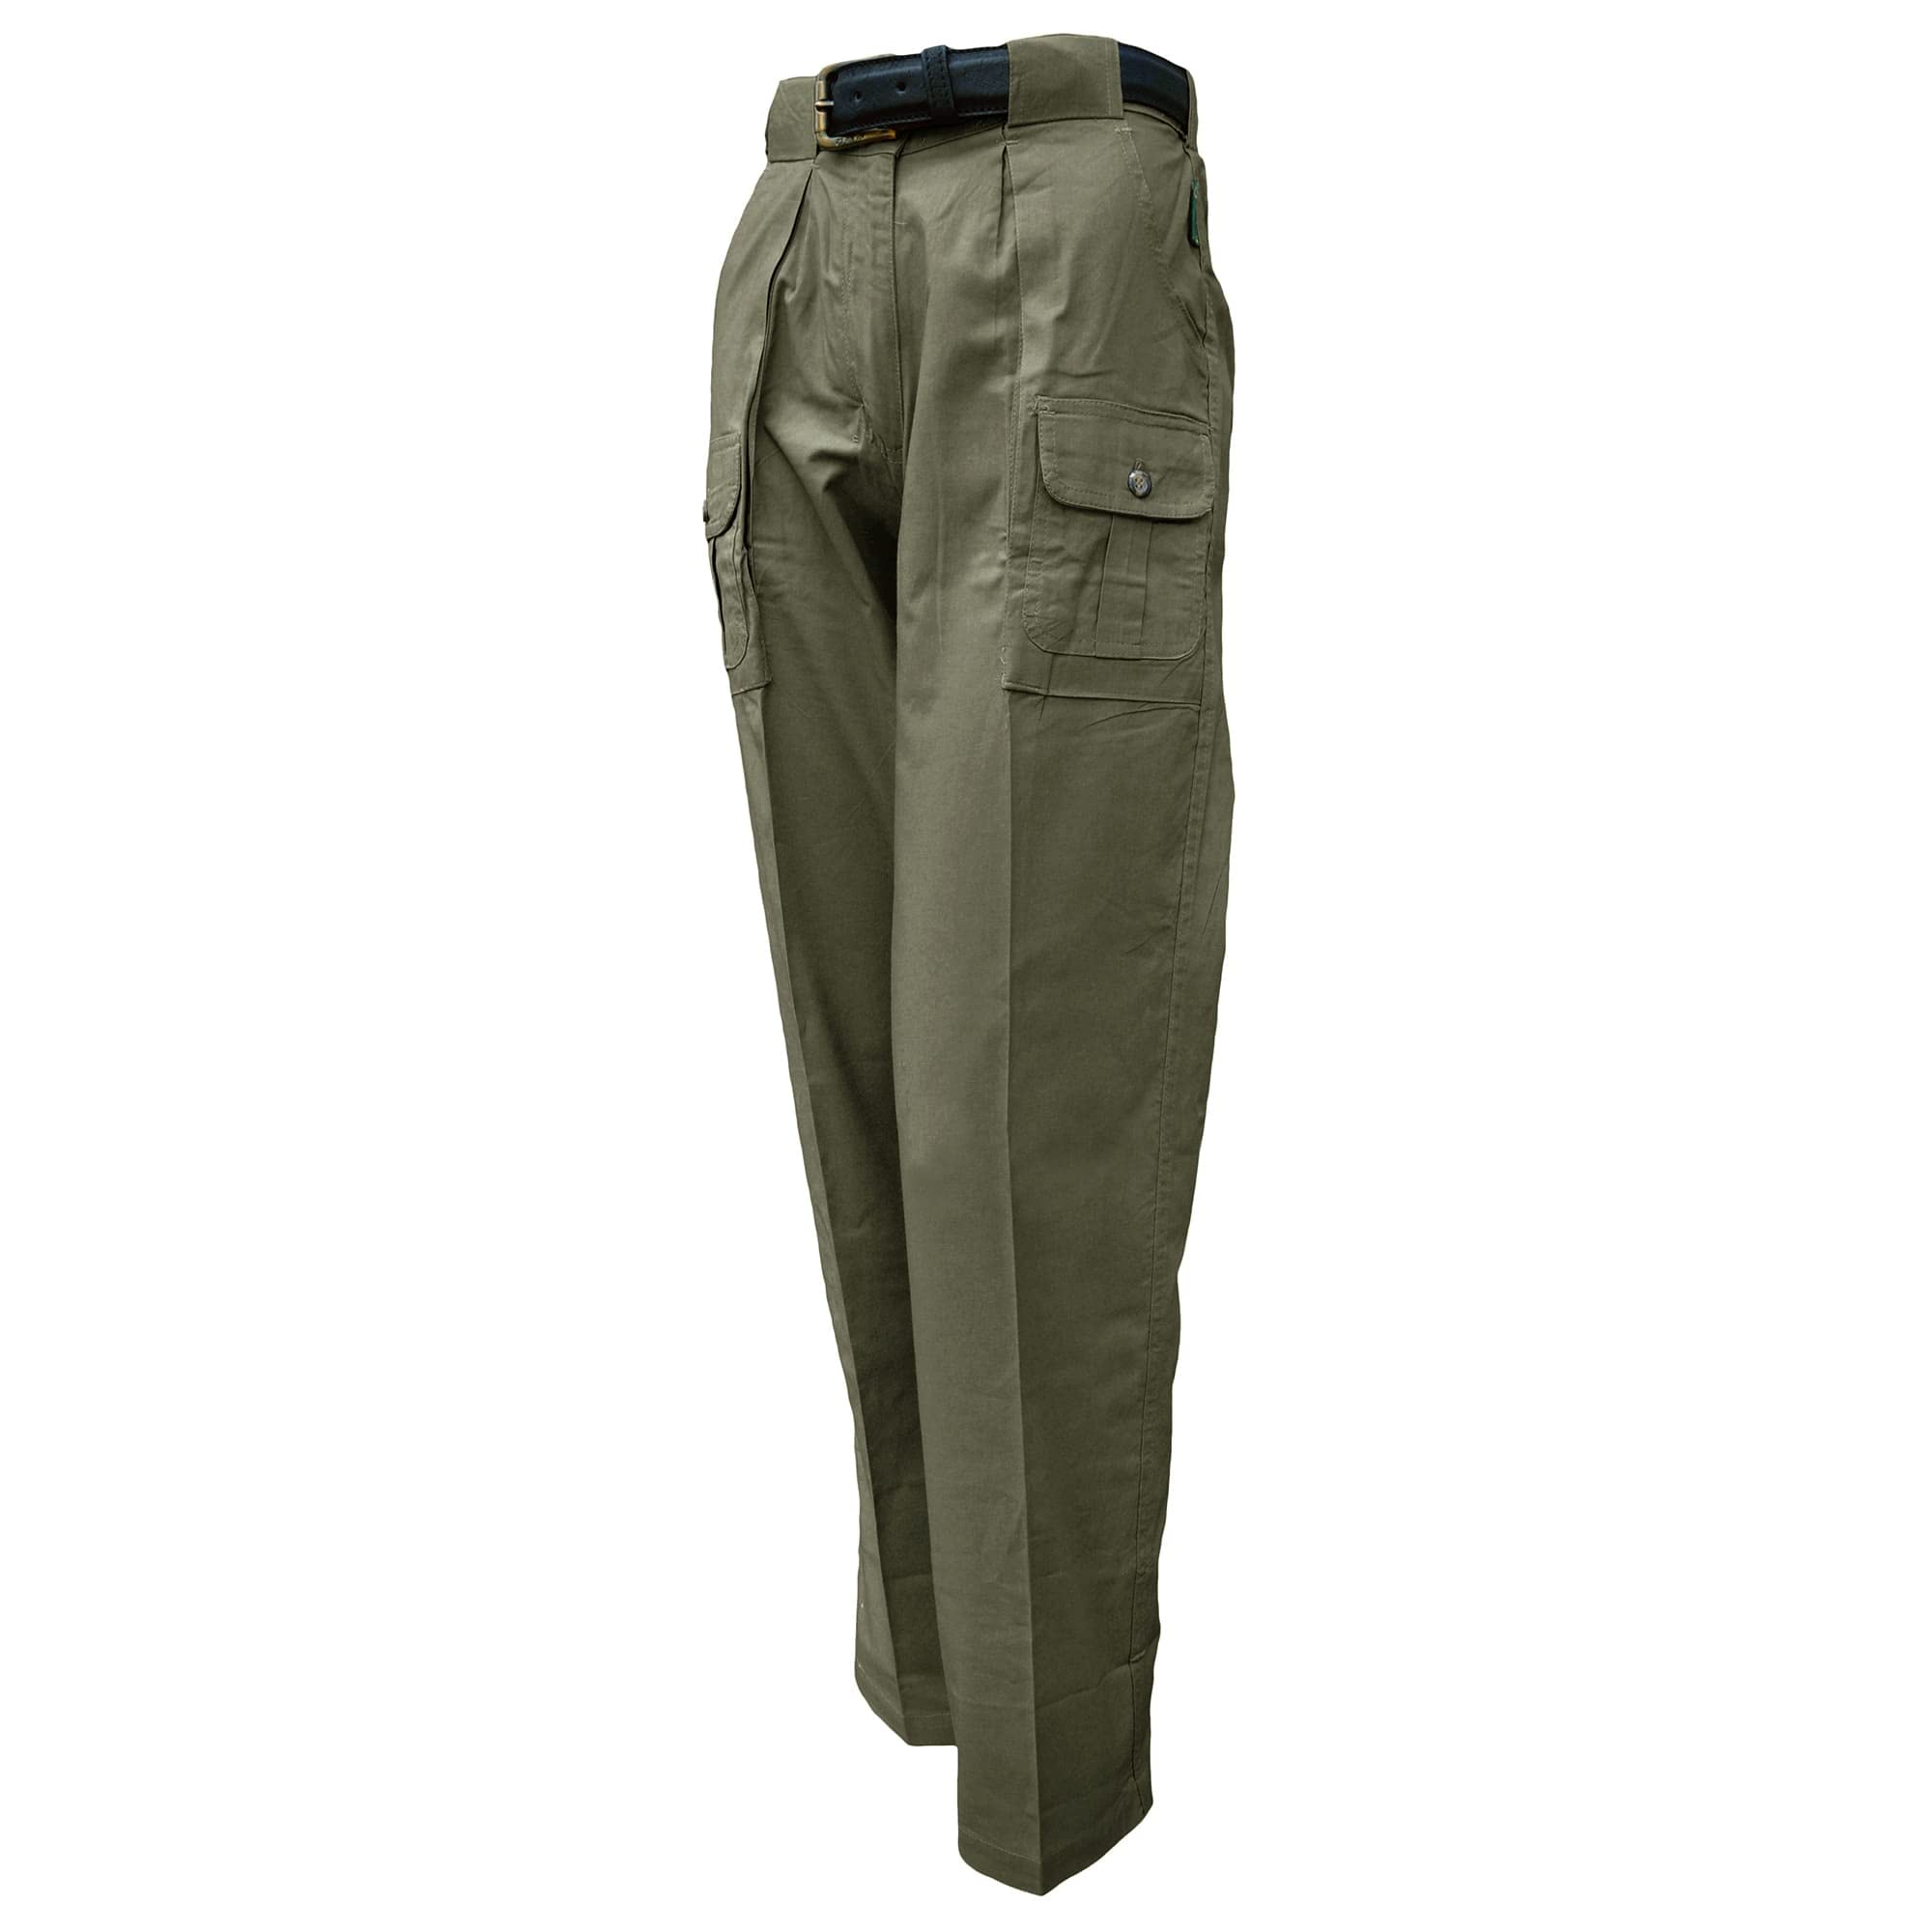 Women's Safari Pants 100% Cotton Pockets at the Knees and Front Pleats by  Tag Safari